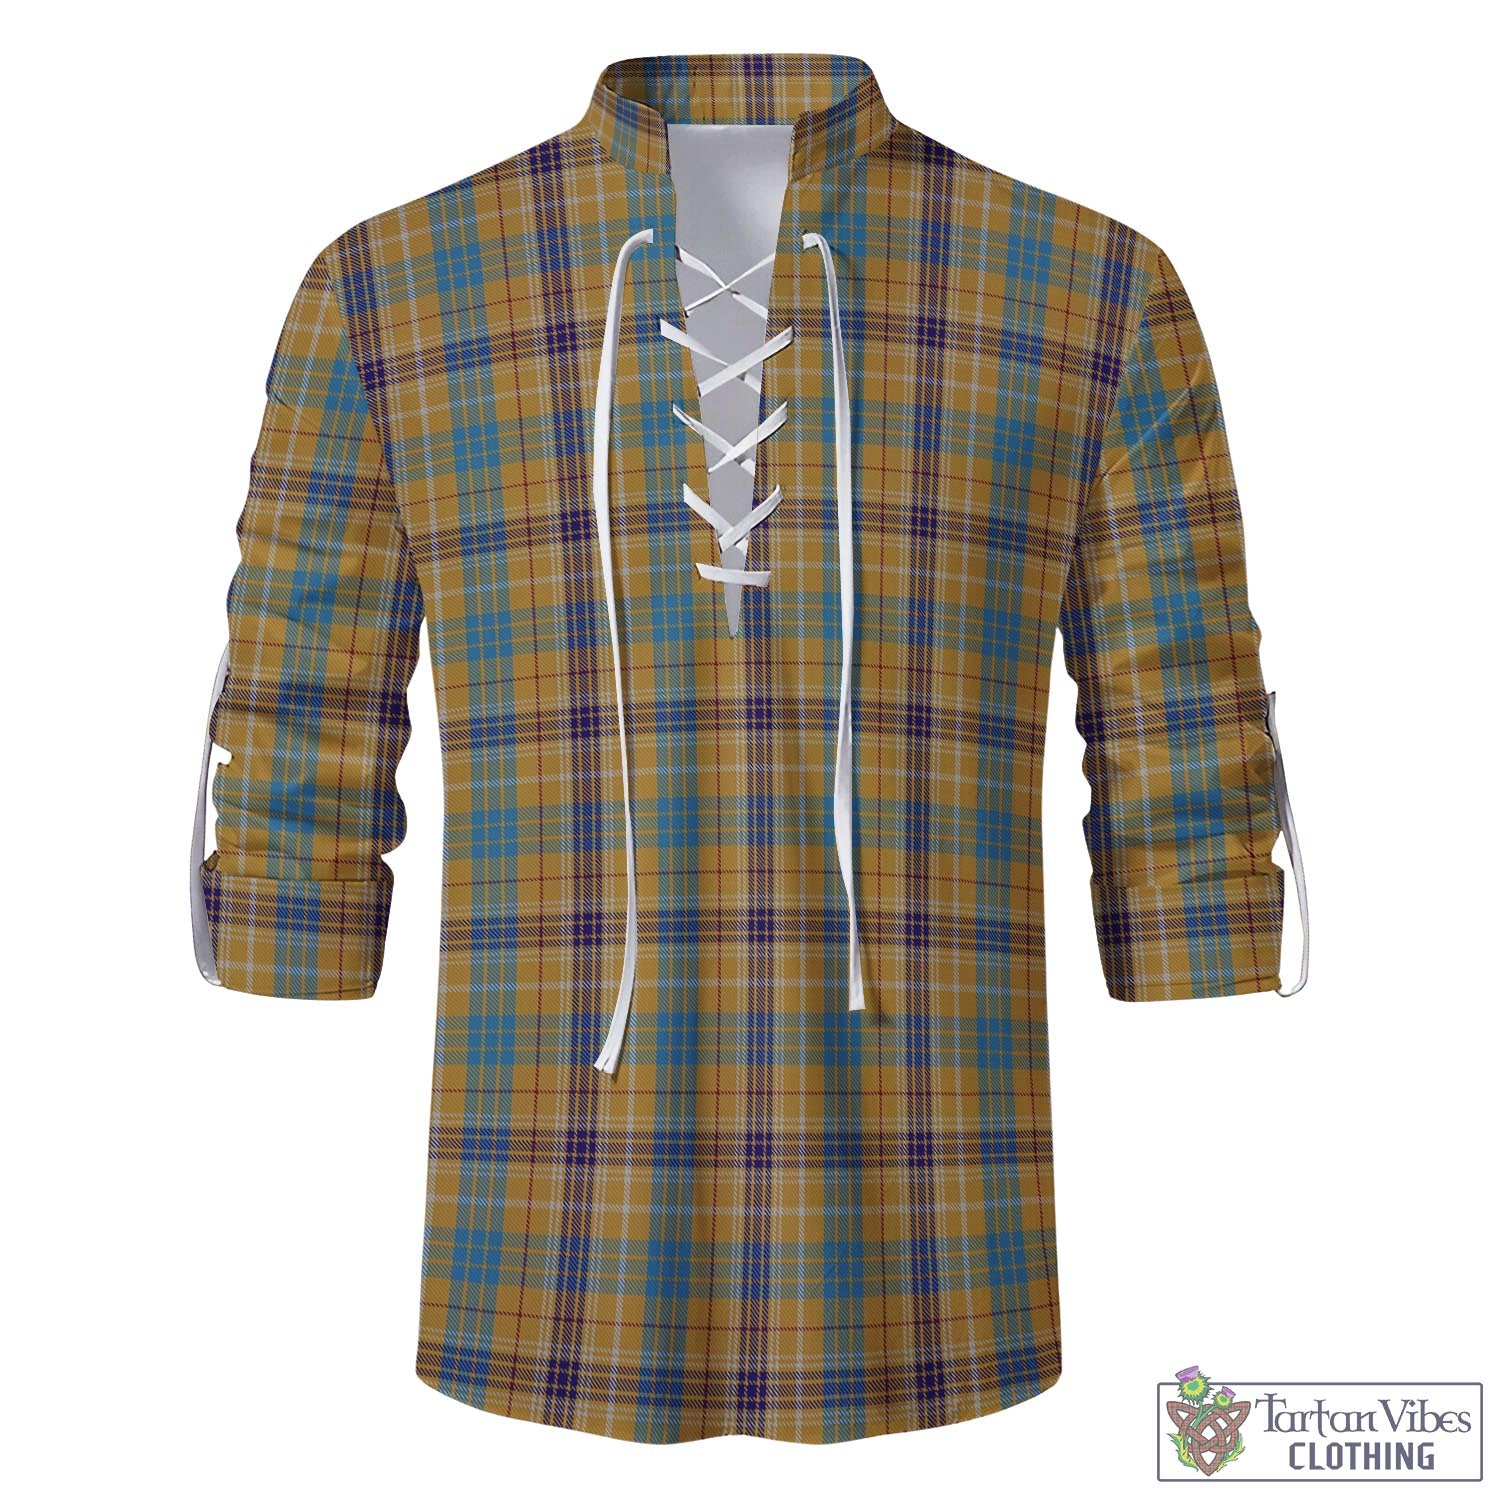 Tartan Vibes Clothing Ottawa Canada Tartan Men's Scottish Traditional Jacobite Ghillie Kilt Shirt